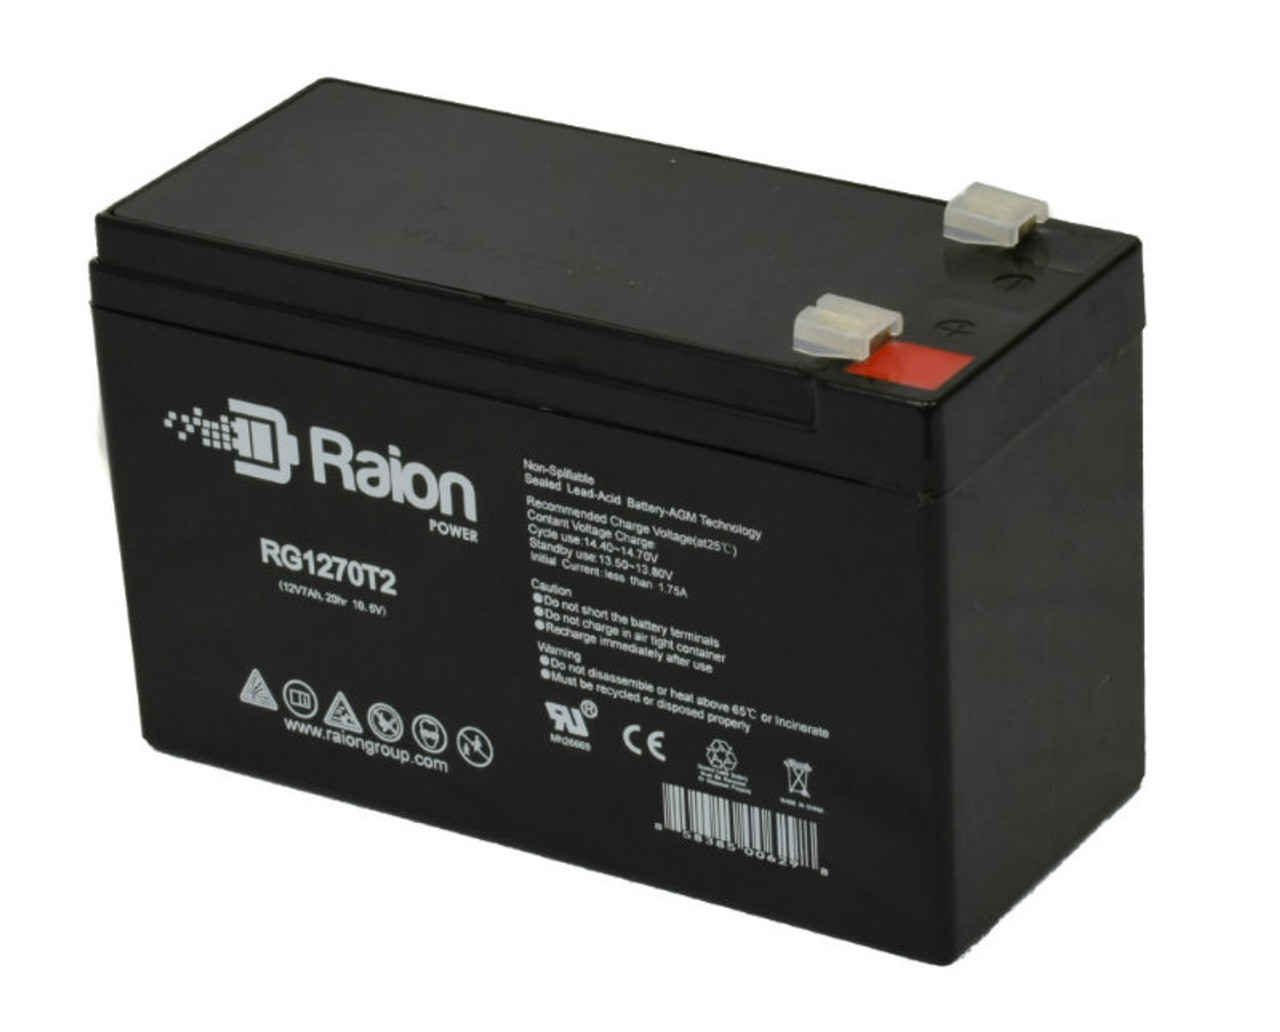 Raion Power RG1270T2 12V 7Ah Lead Acid Battery for Evo Powerboards Uber Scoot 300W ES04